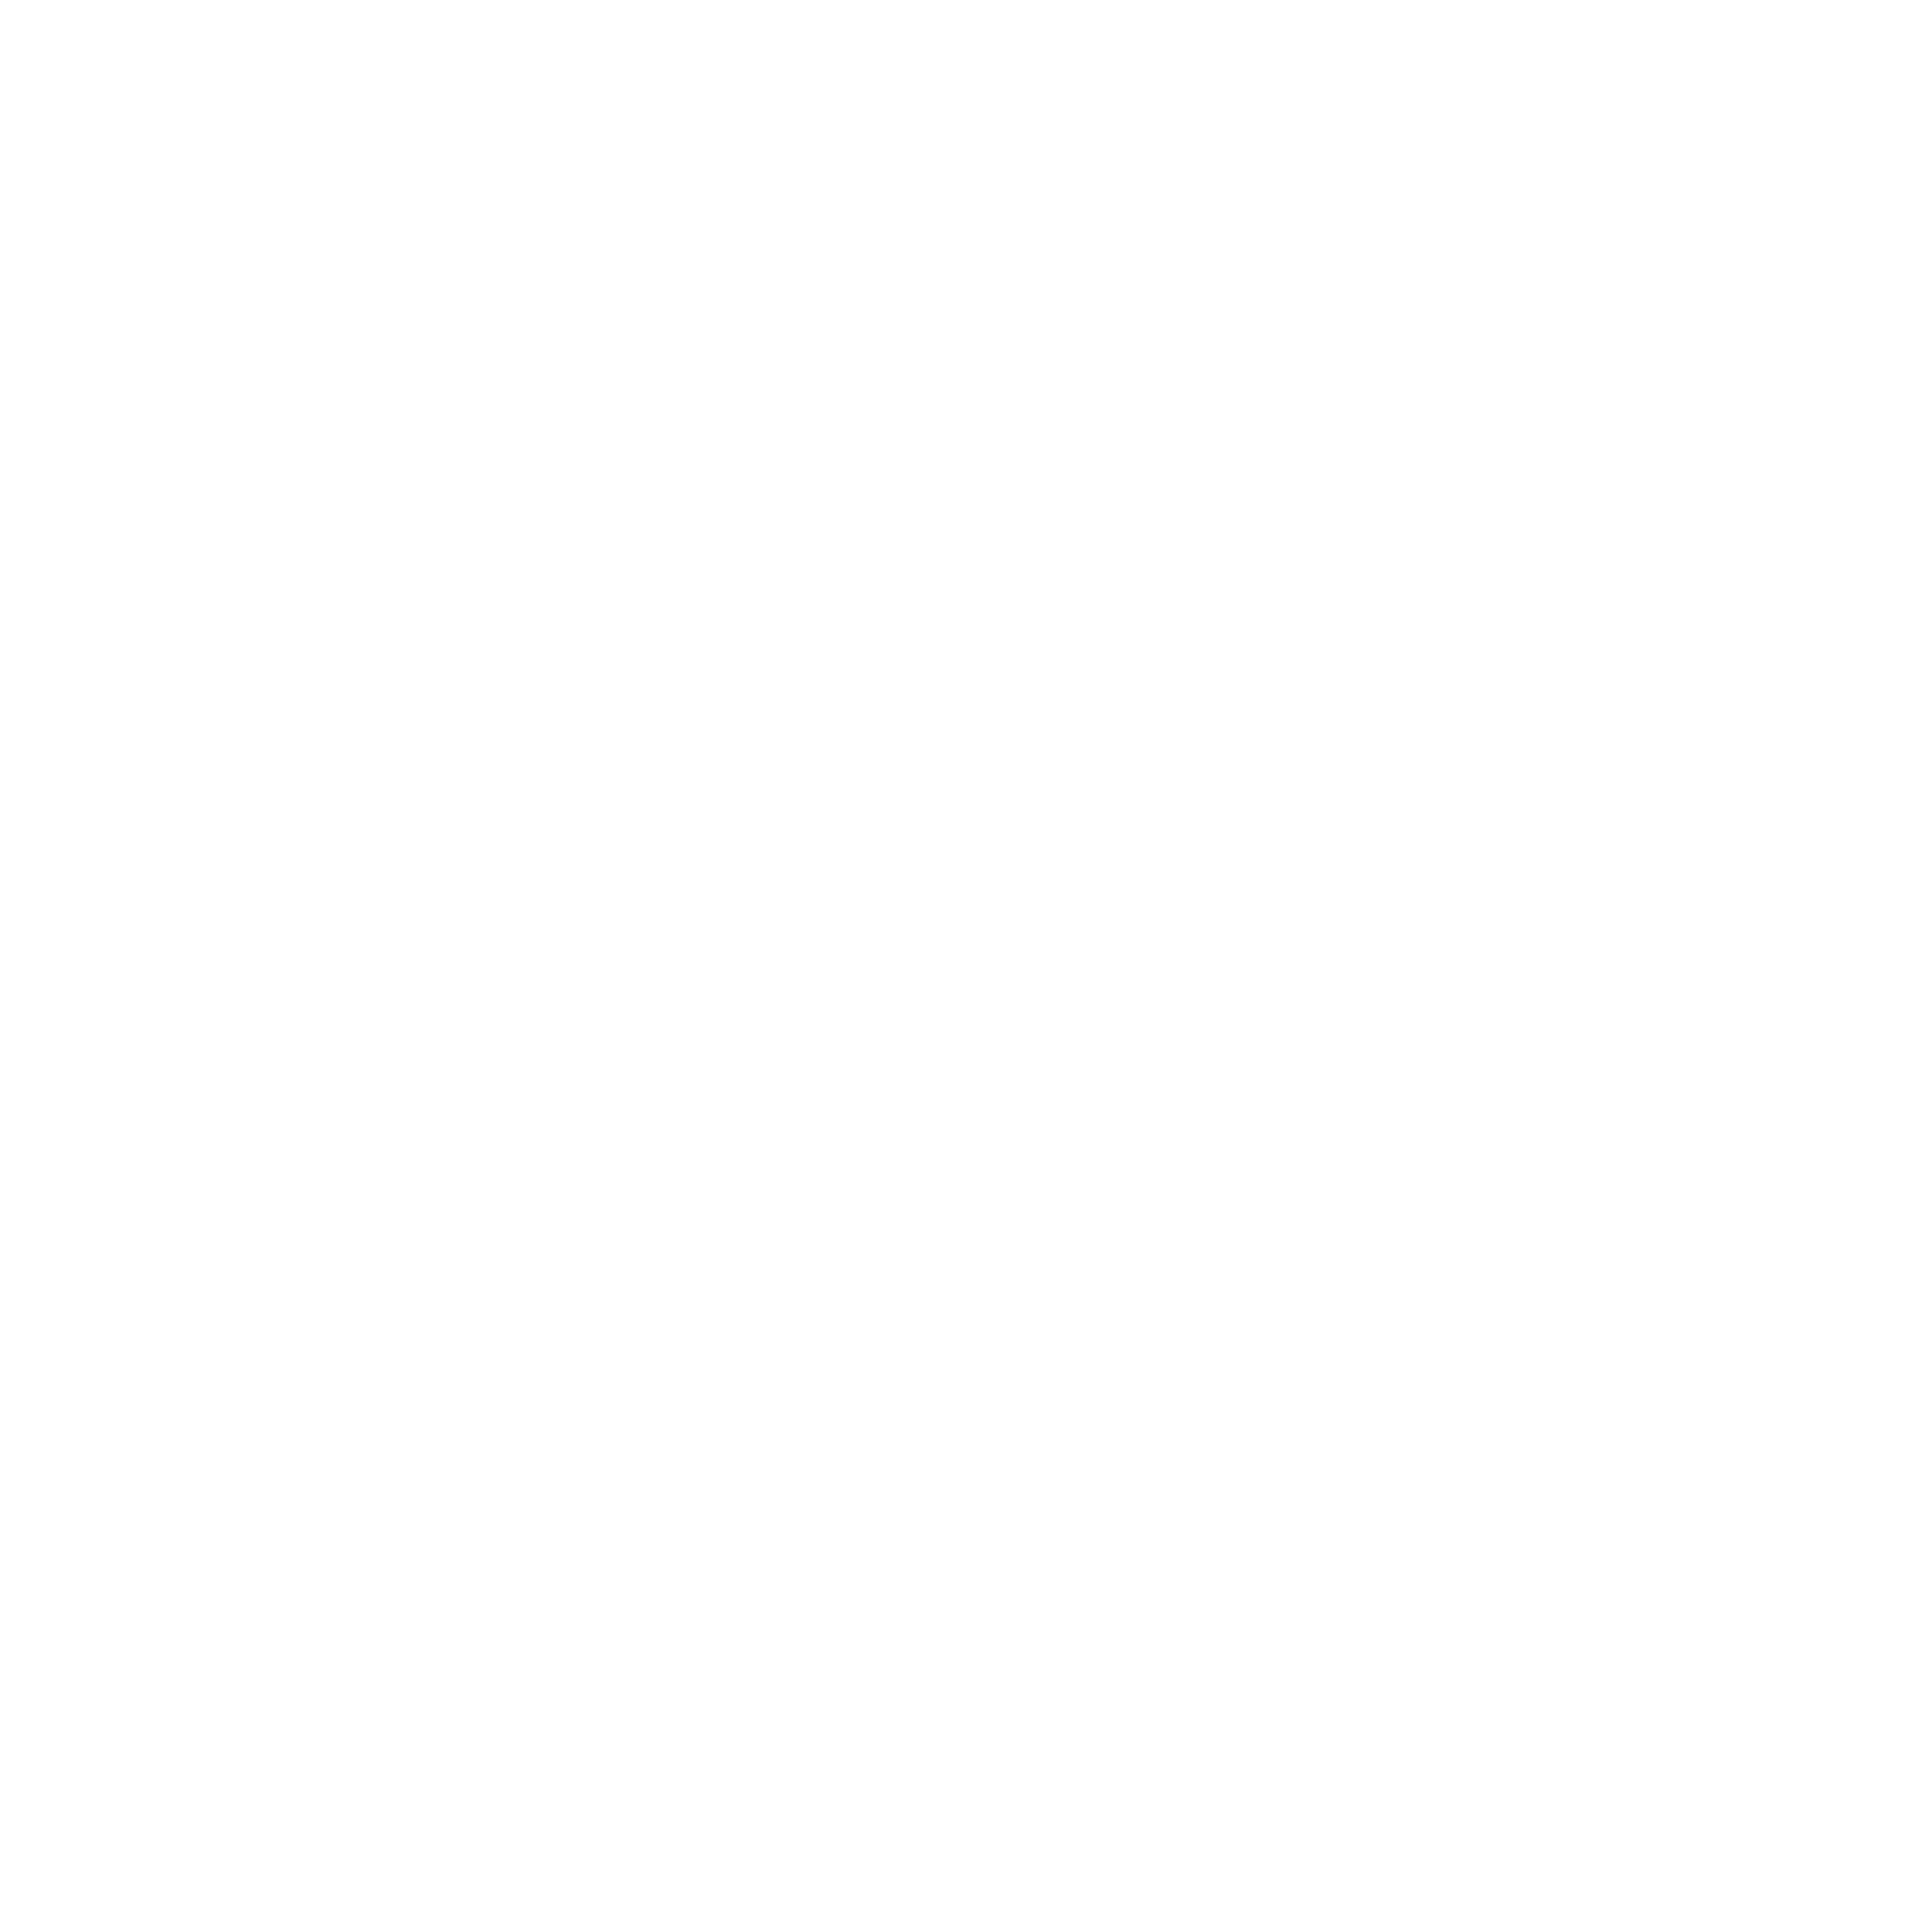 Epitech Digital School logo